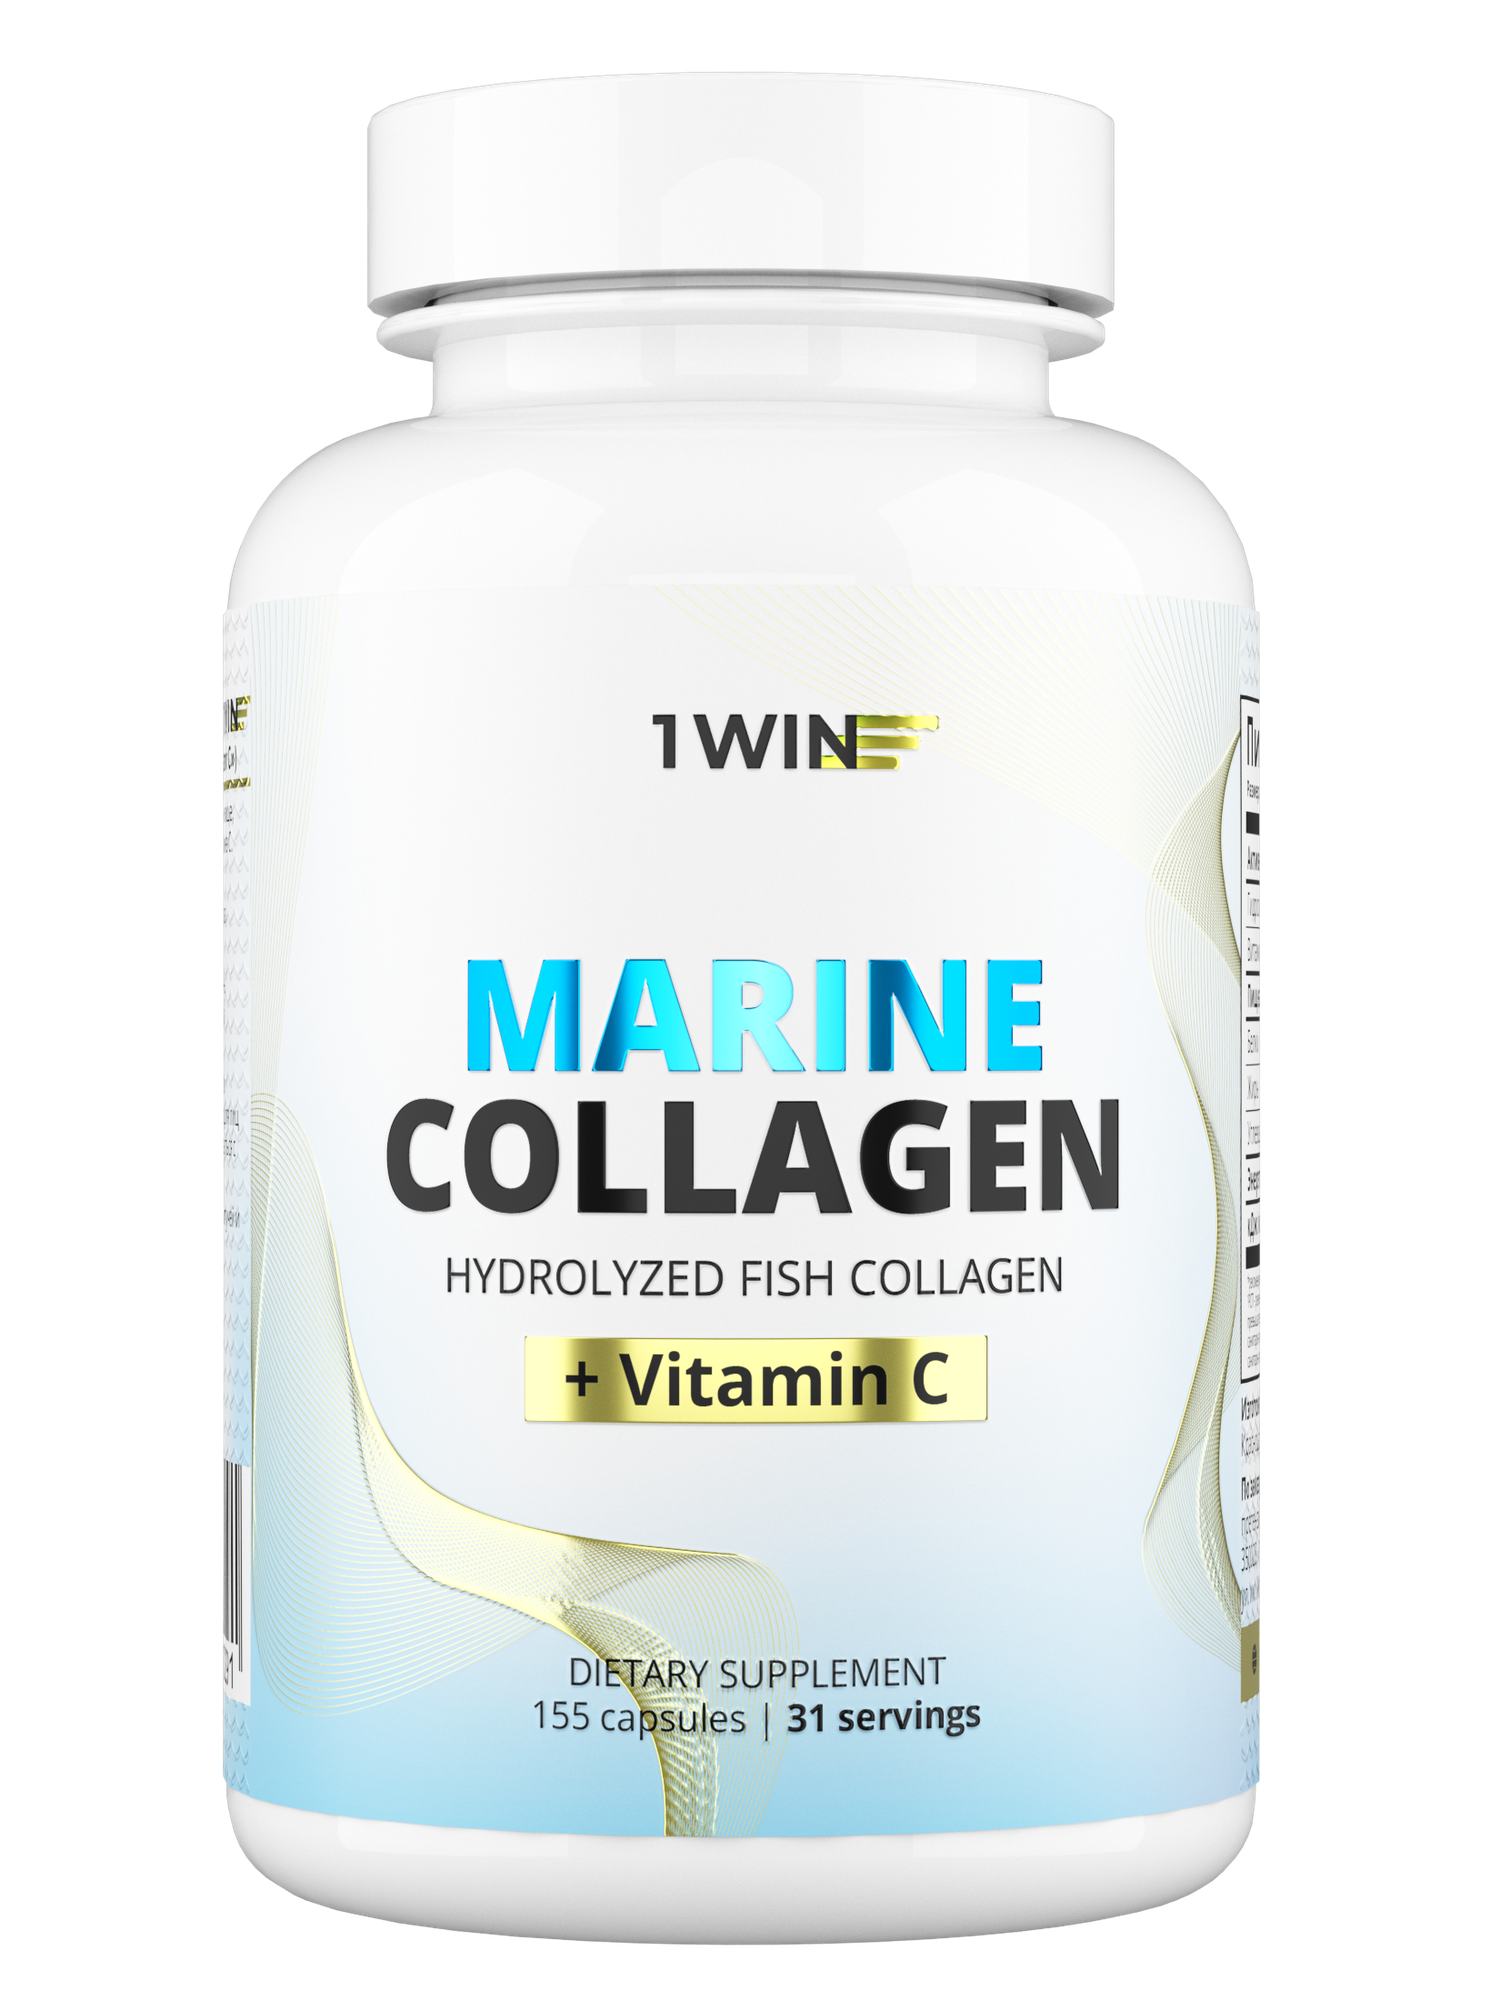 1WIN Морской коллаген с витамином c в капсулах, 155 шт